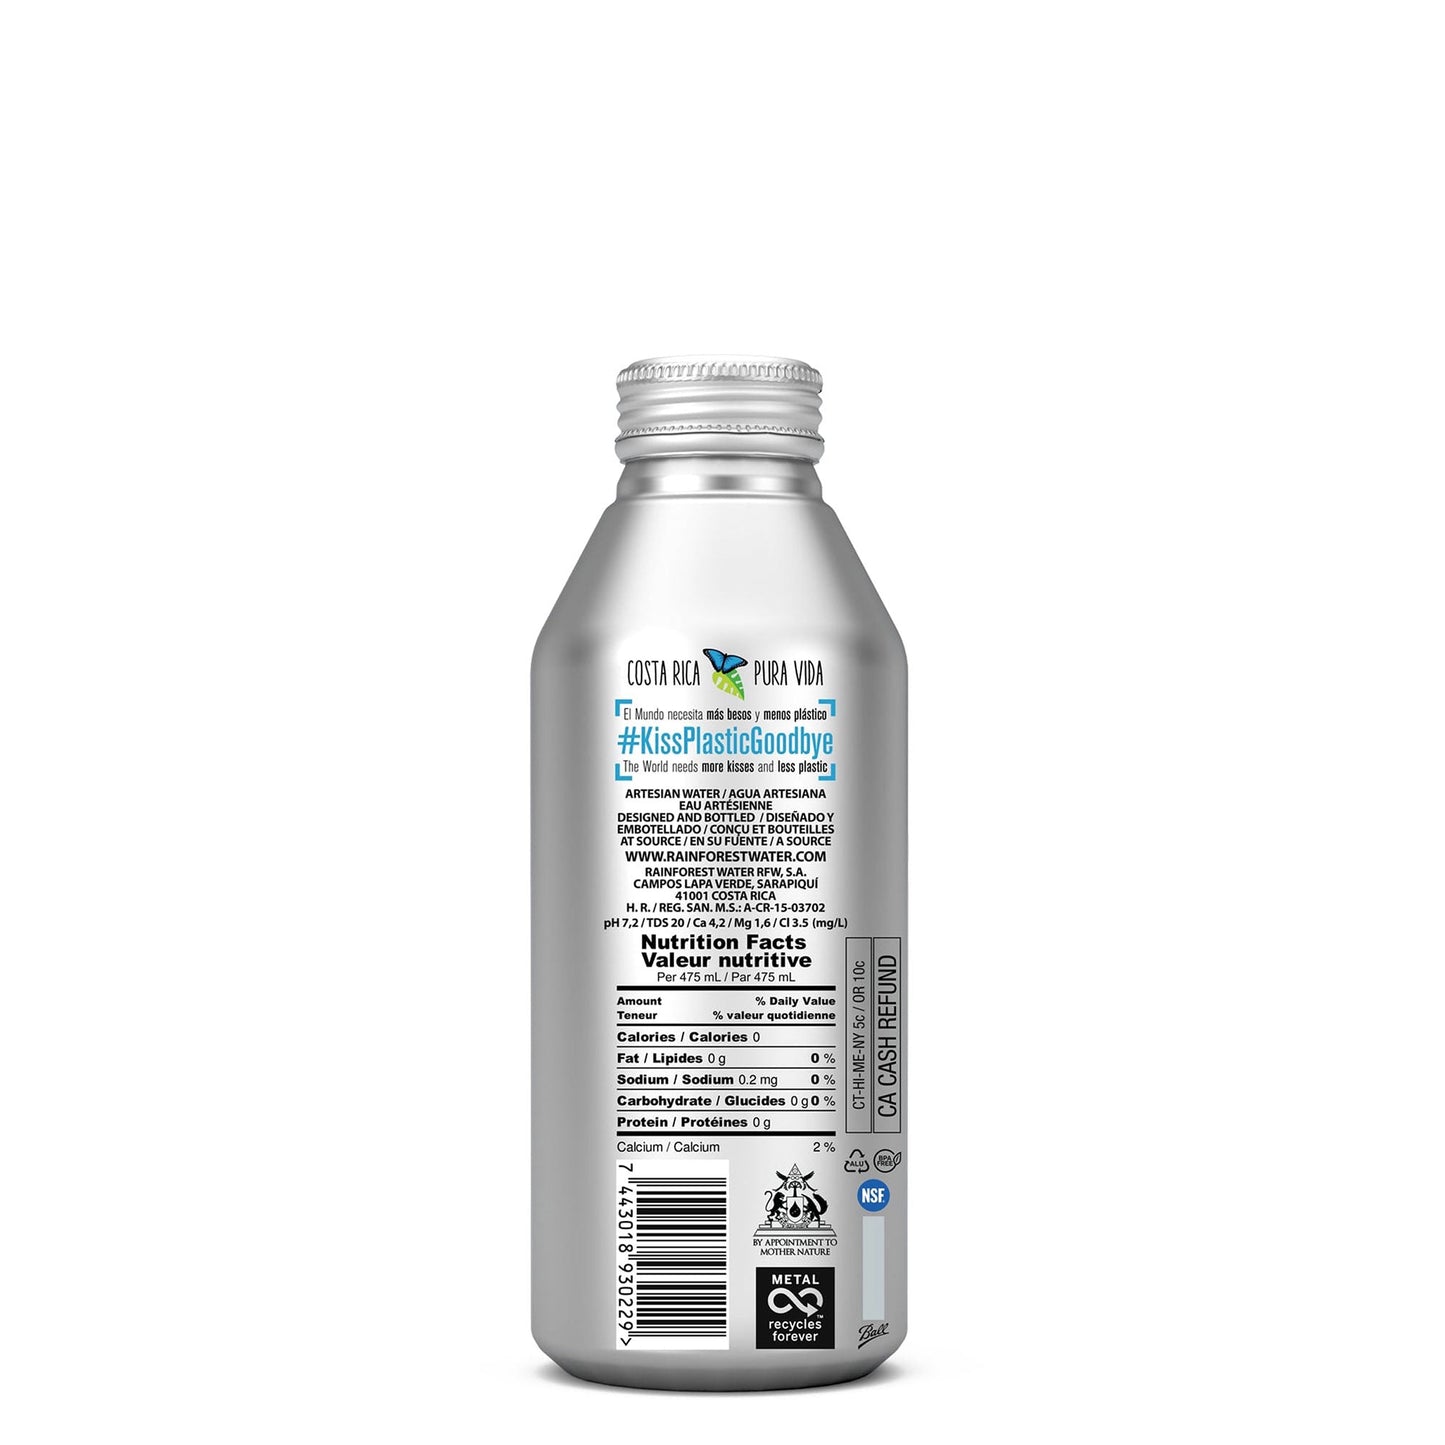 [Wholesale] RainForest Artesian Water Aluminum BottleCan 475 mL